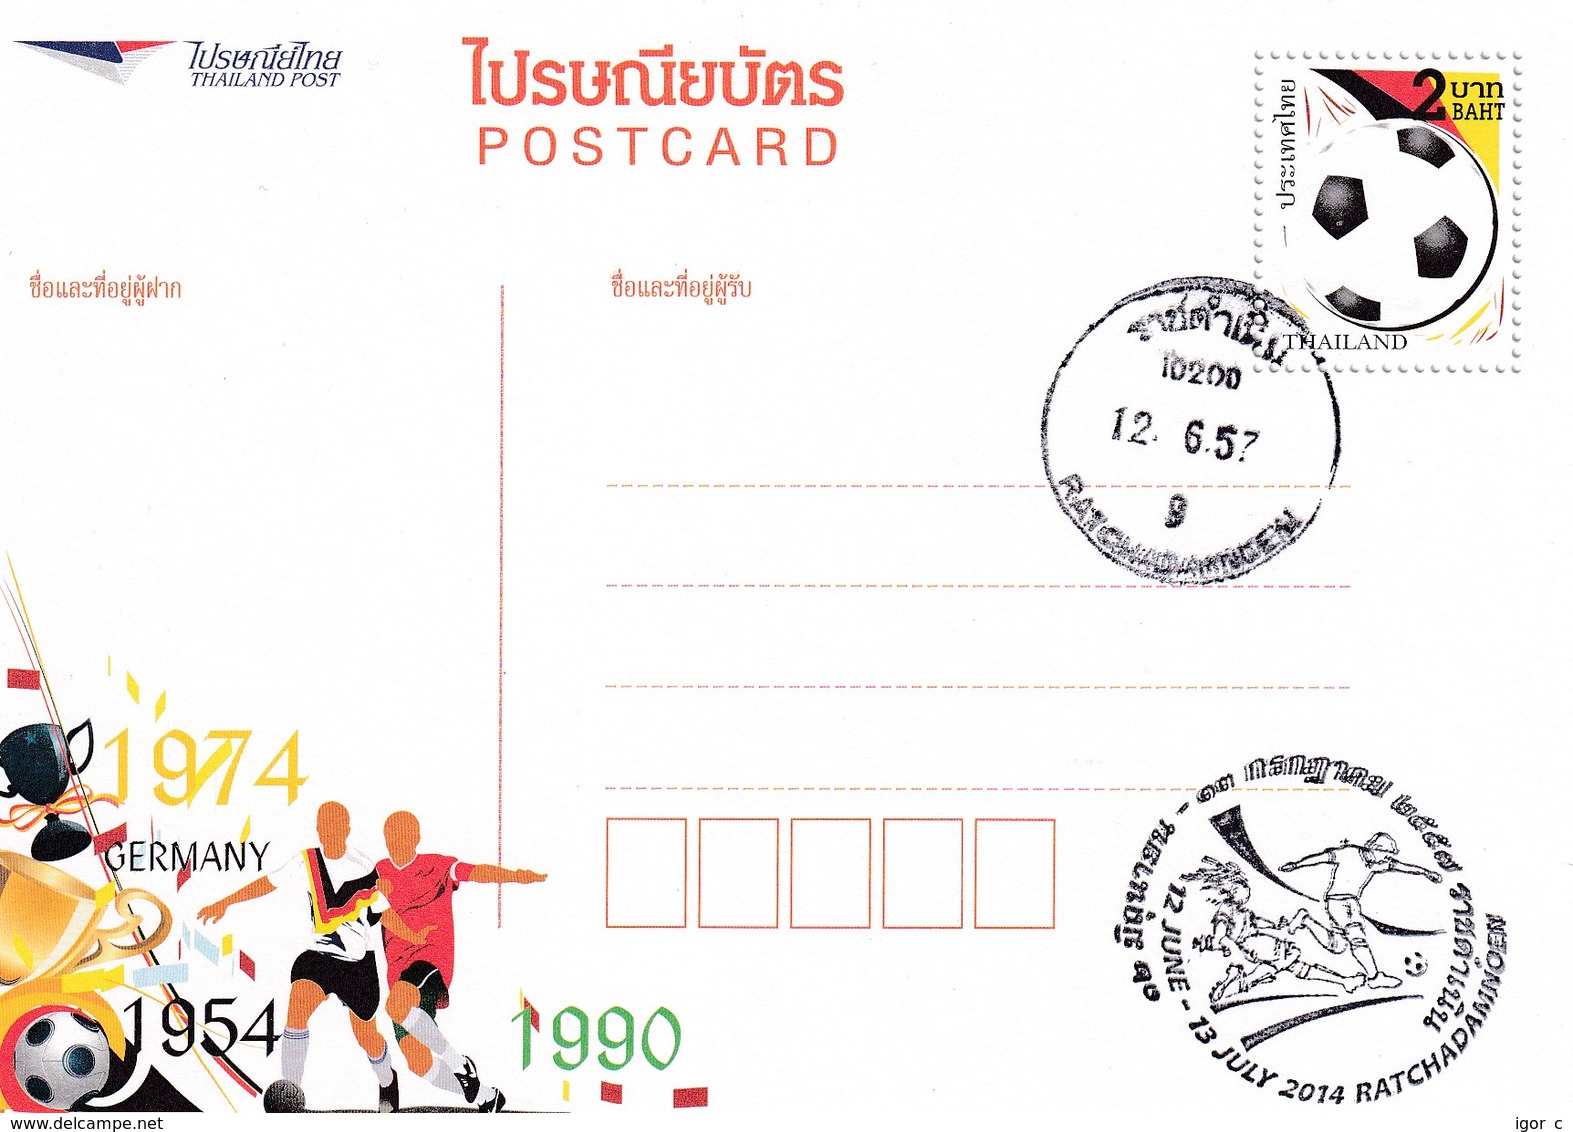 Thailand 2014 Postal Stationery Card: Football Fussball Soccer Calcio; FIFA World Cup 1954 1974 1990 Germany Champion - 1954 – Switzerland